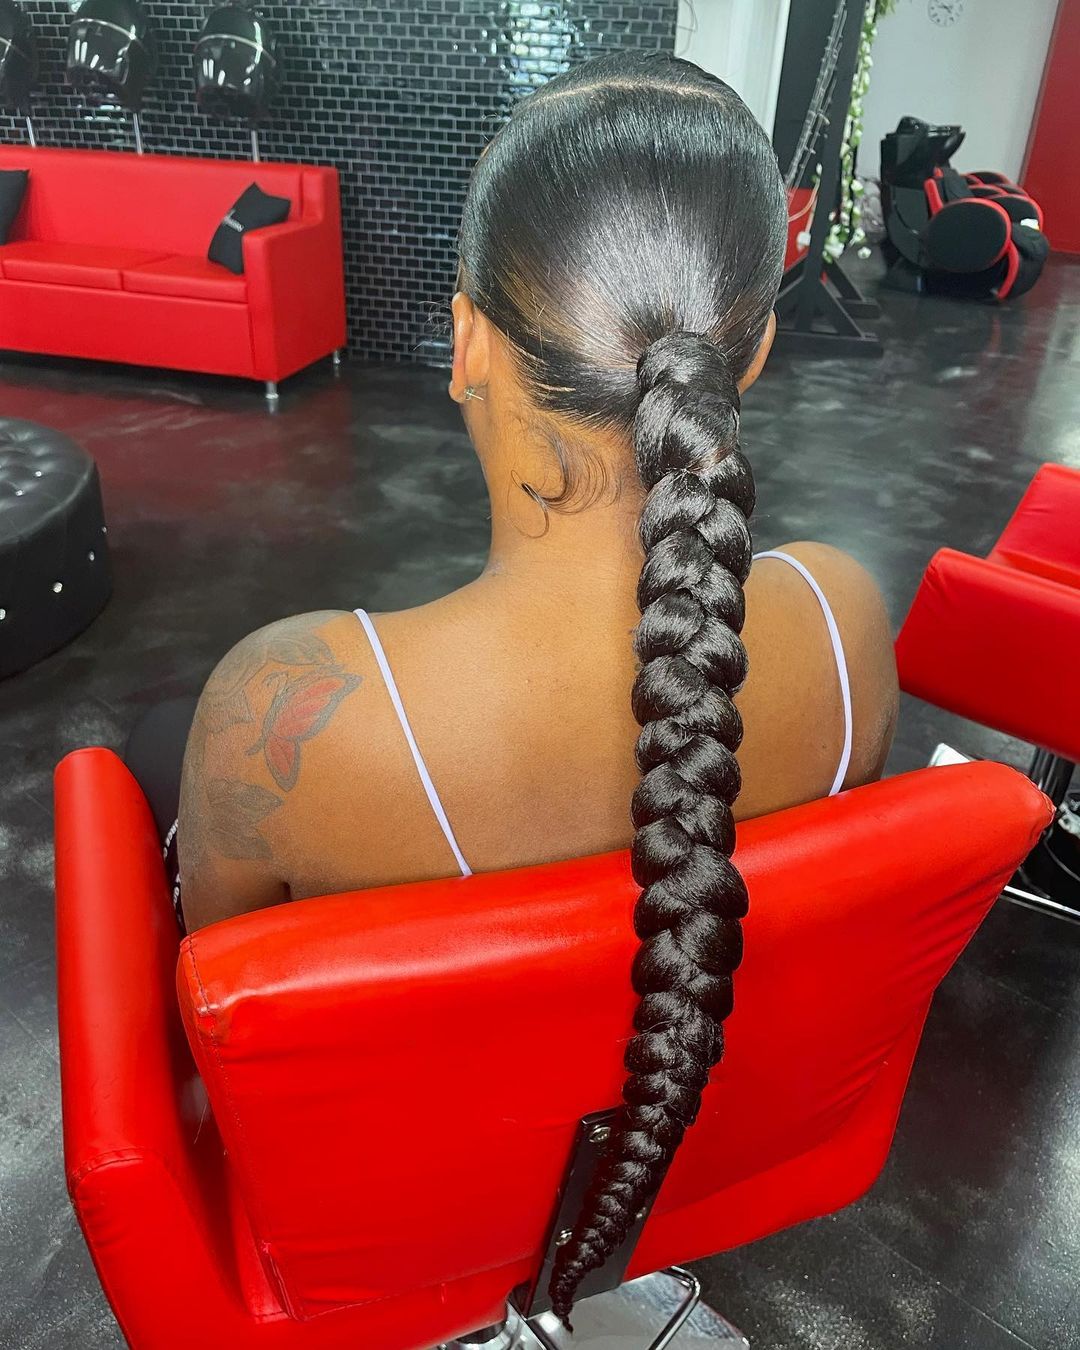 ponytail with braid